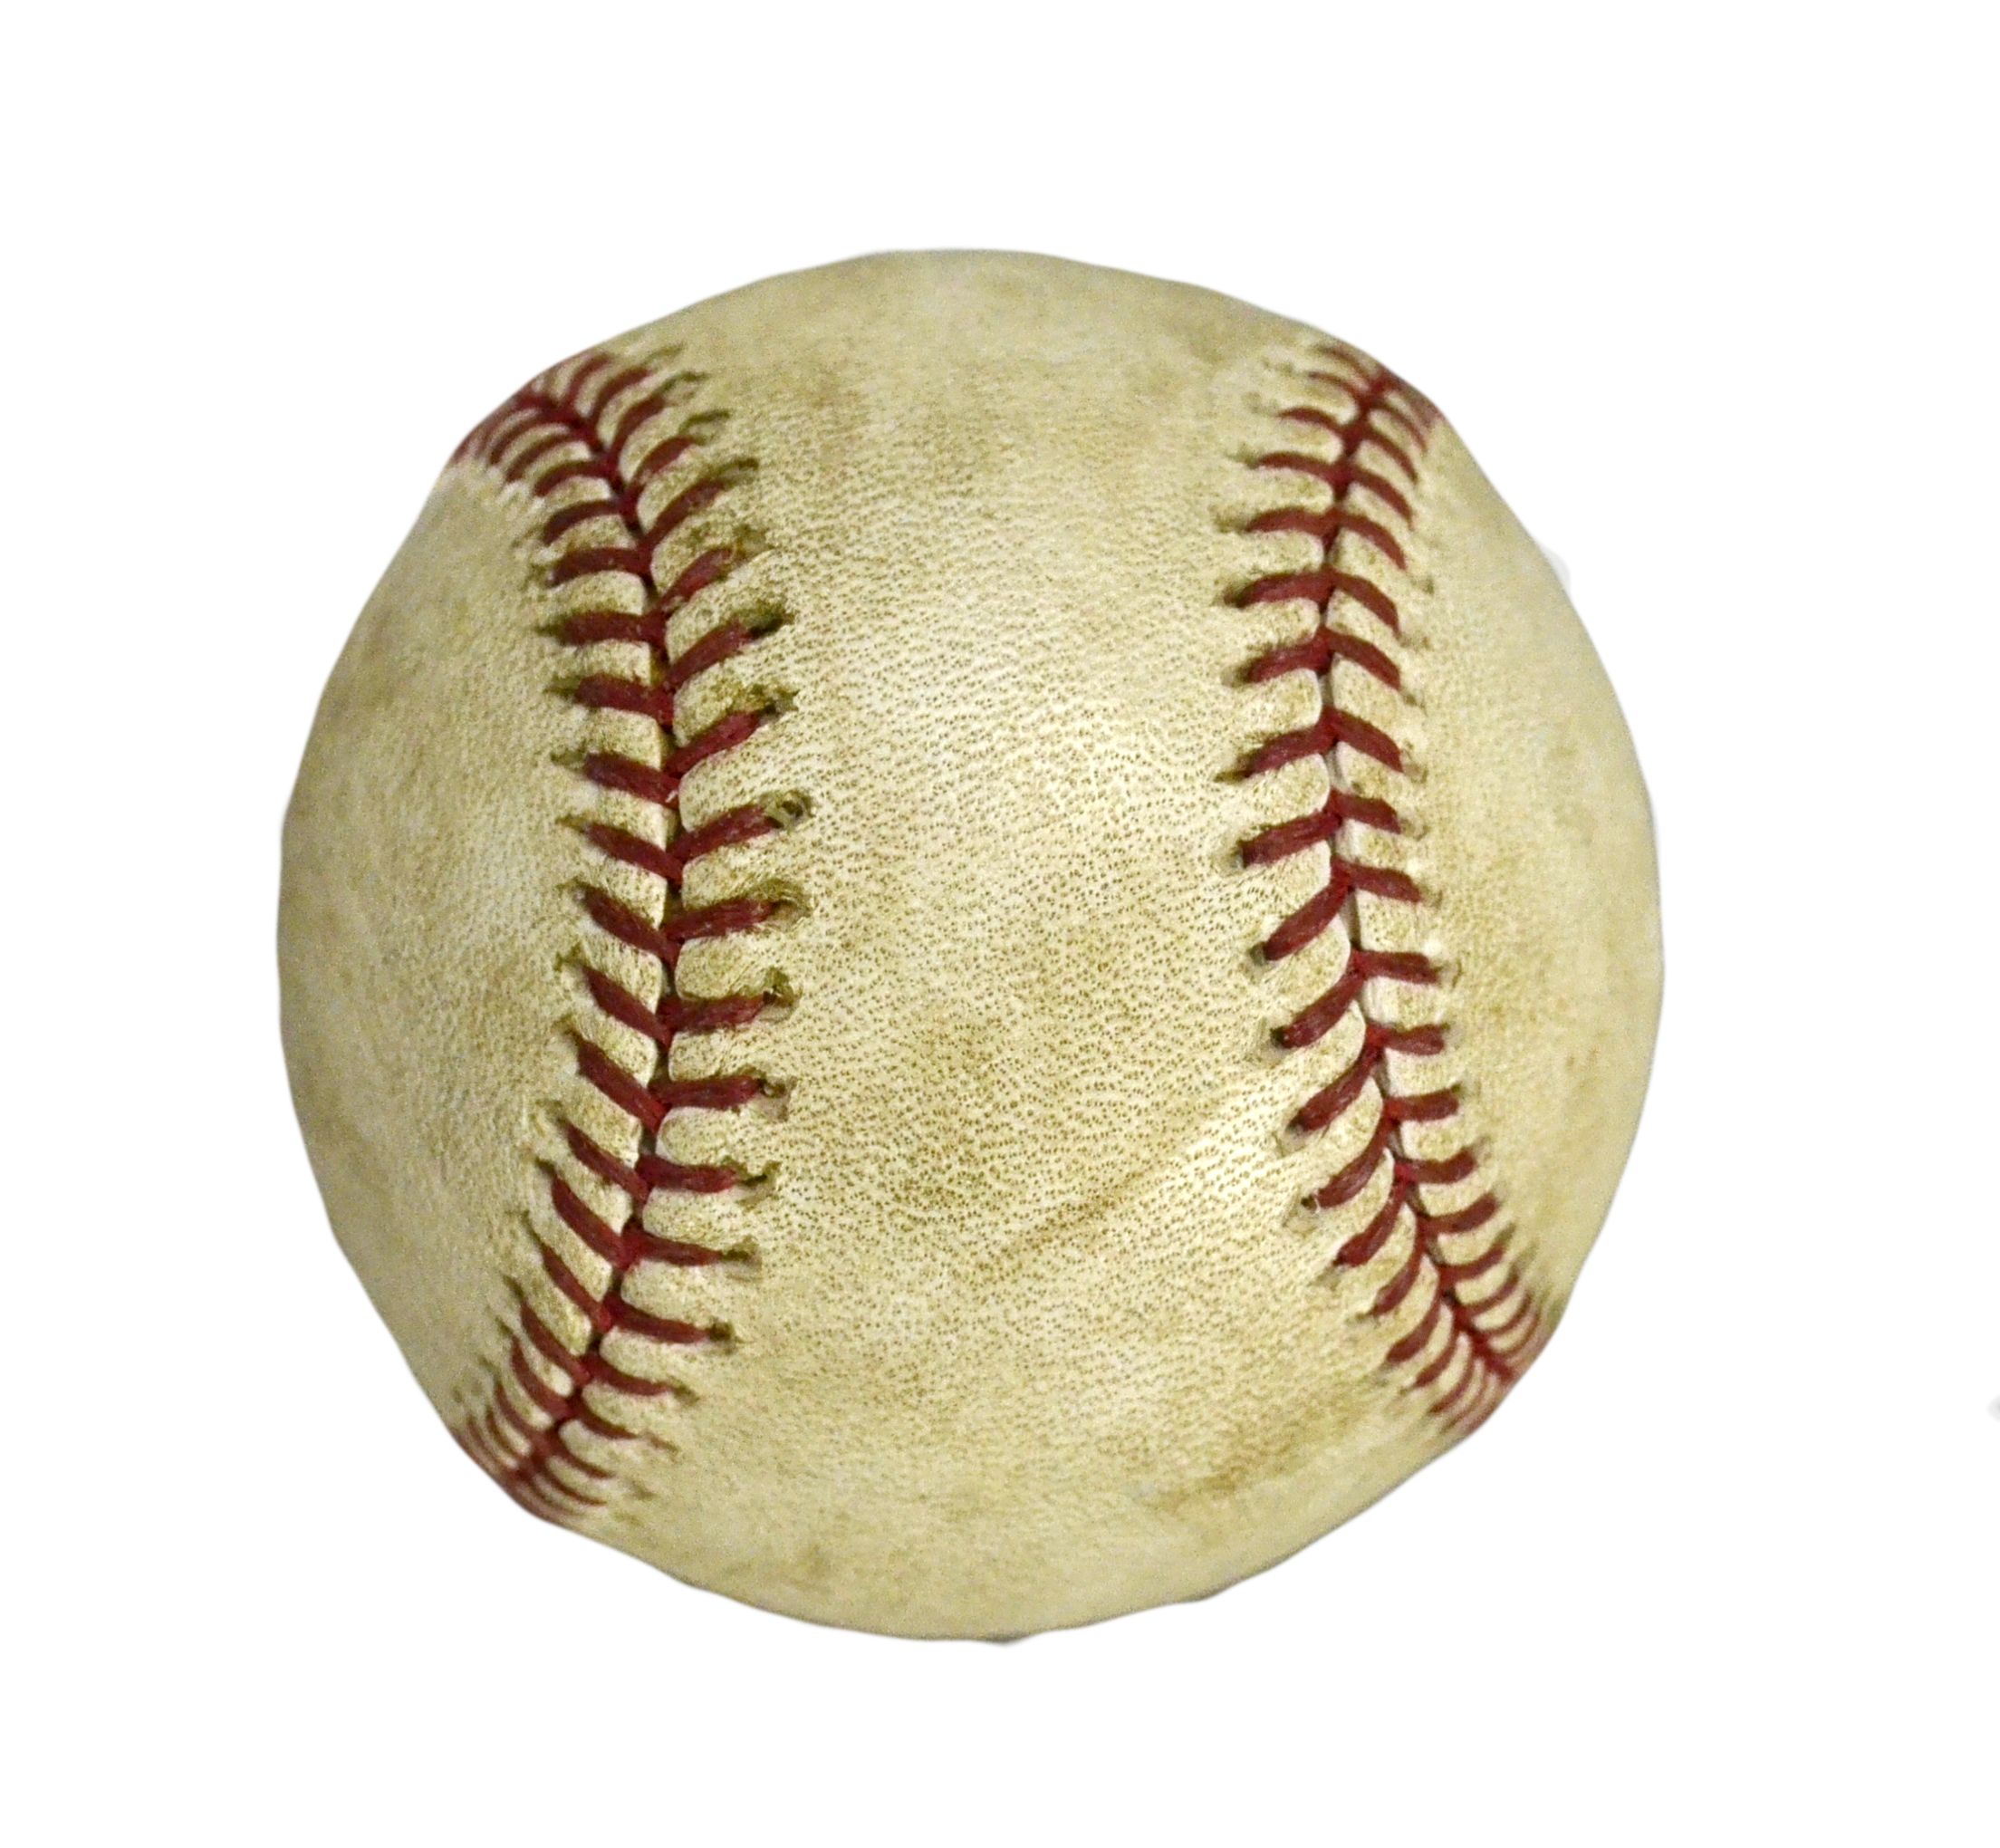 Baseball ball. Бейсбольный мяч. Мяч для бейсбола на прозрачном фоне. Бейсбольный мяч Universal. Бейсбольный мяч белый.